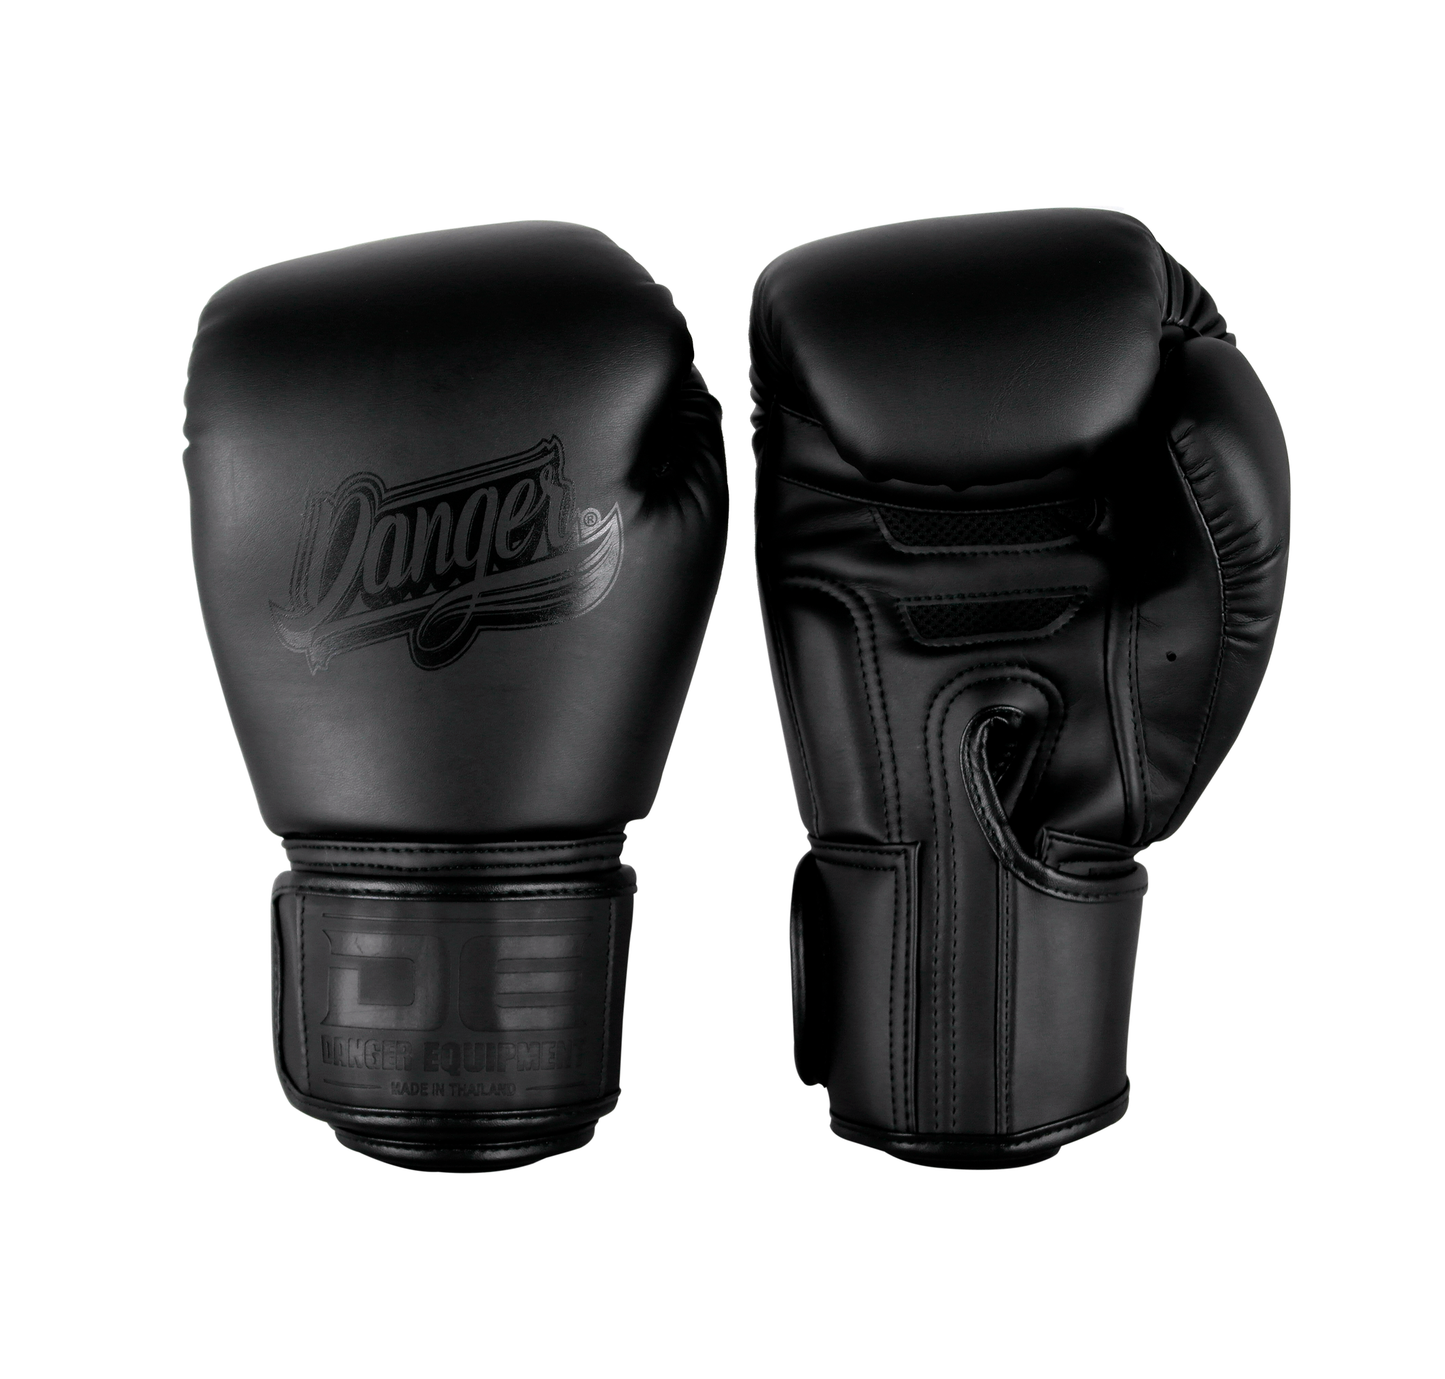 DANGER Boxing Gloves Supermax 2.0 Black Edition